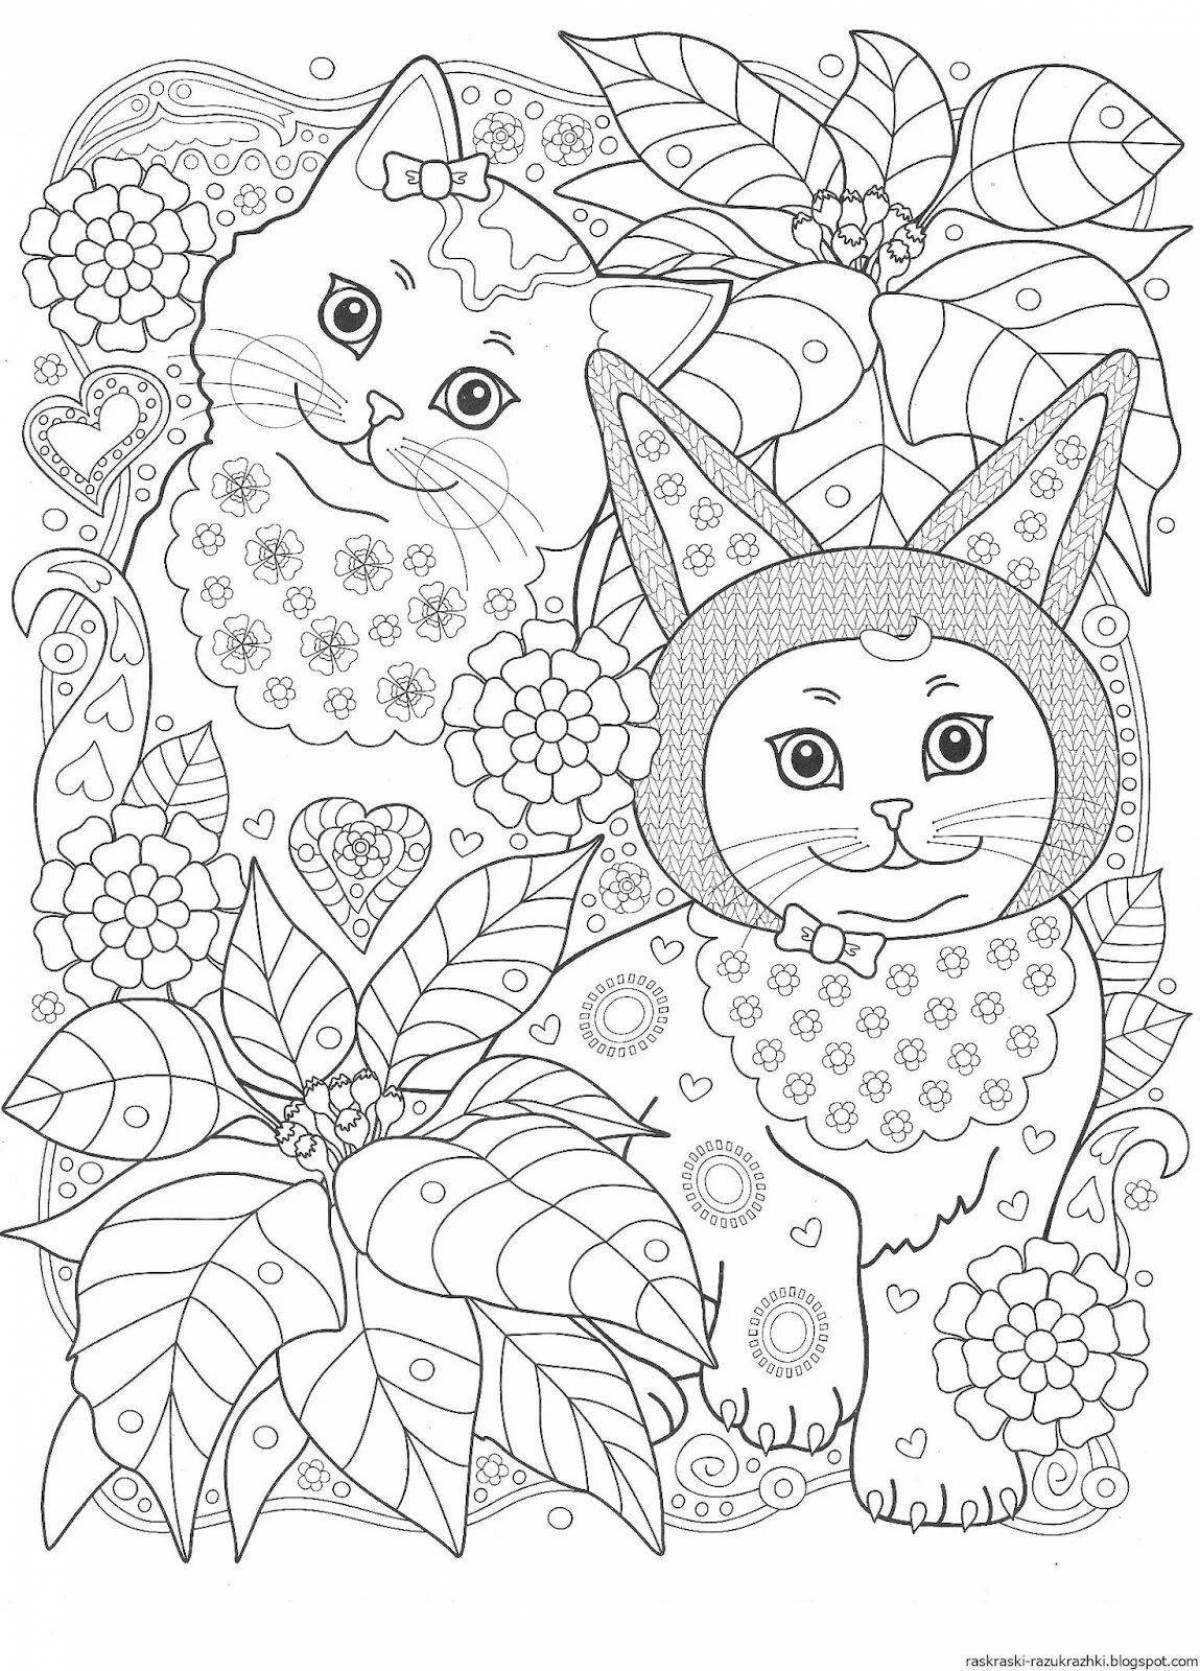 Snuggly coloring page антистрессовый котенок